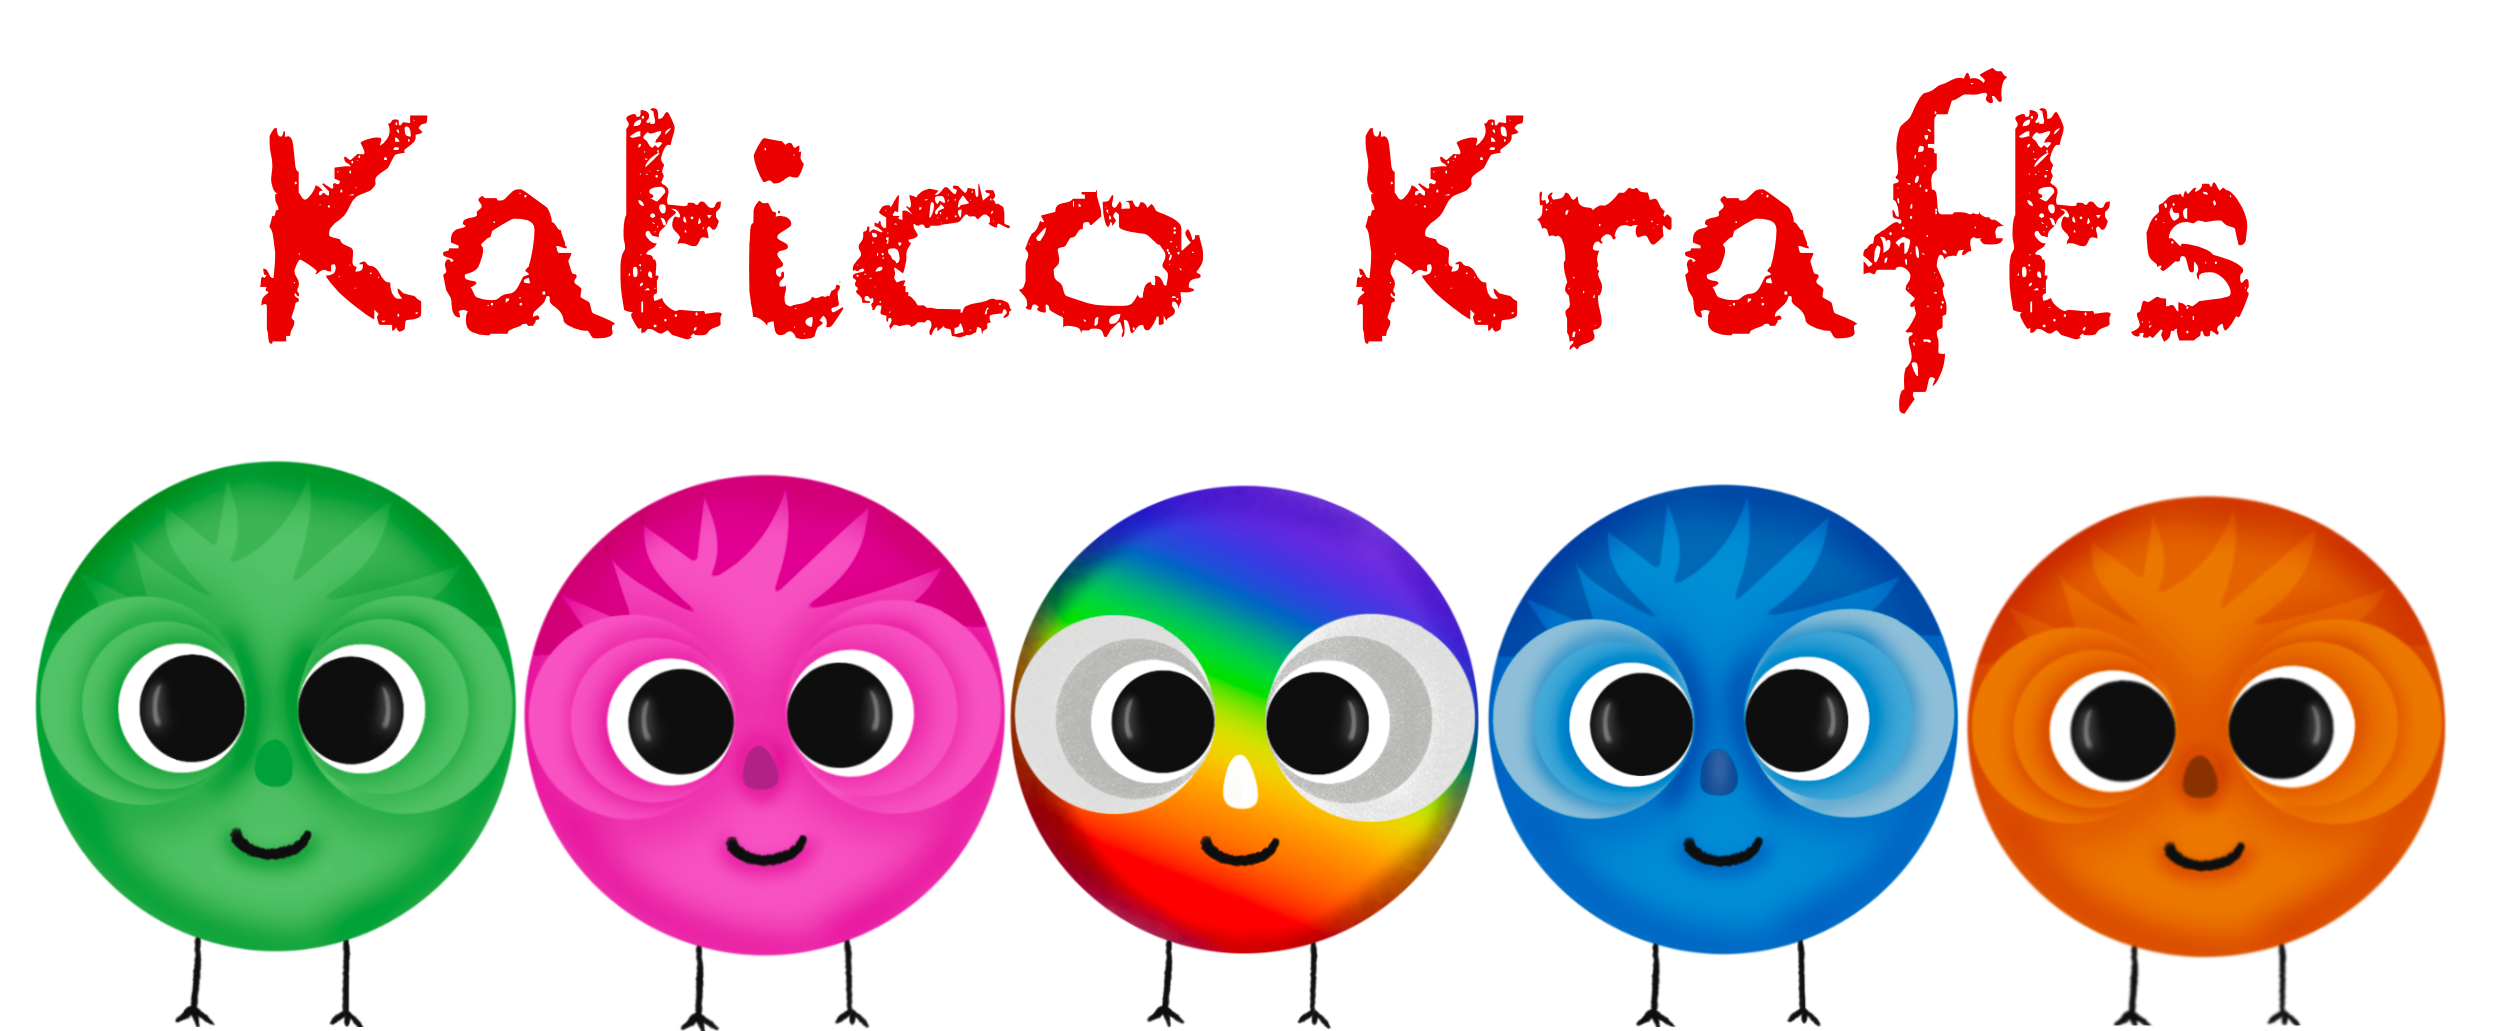 Katico Krafts